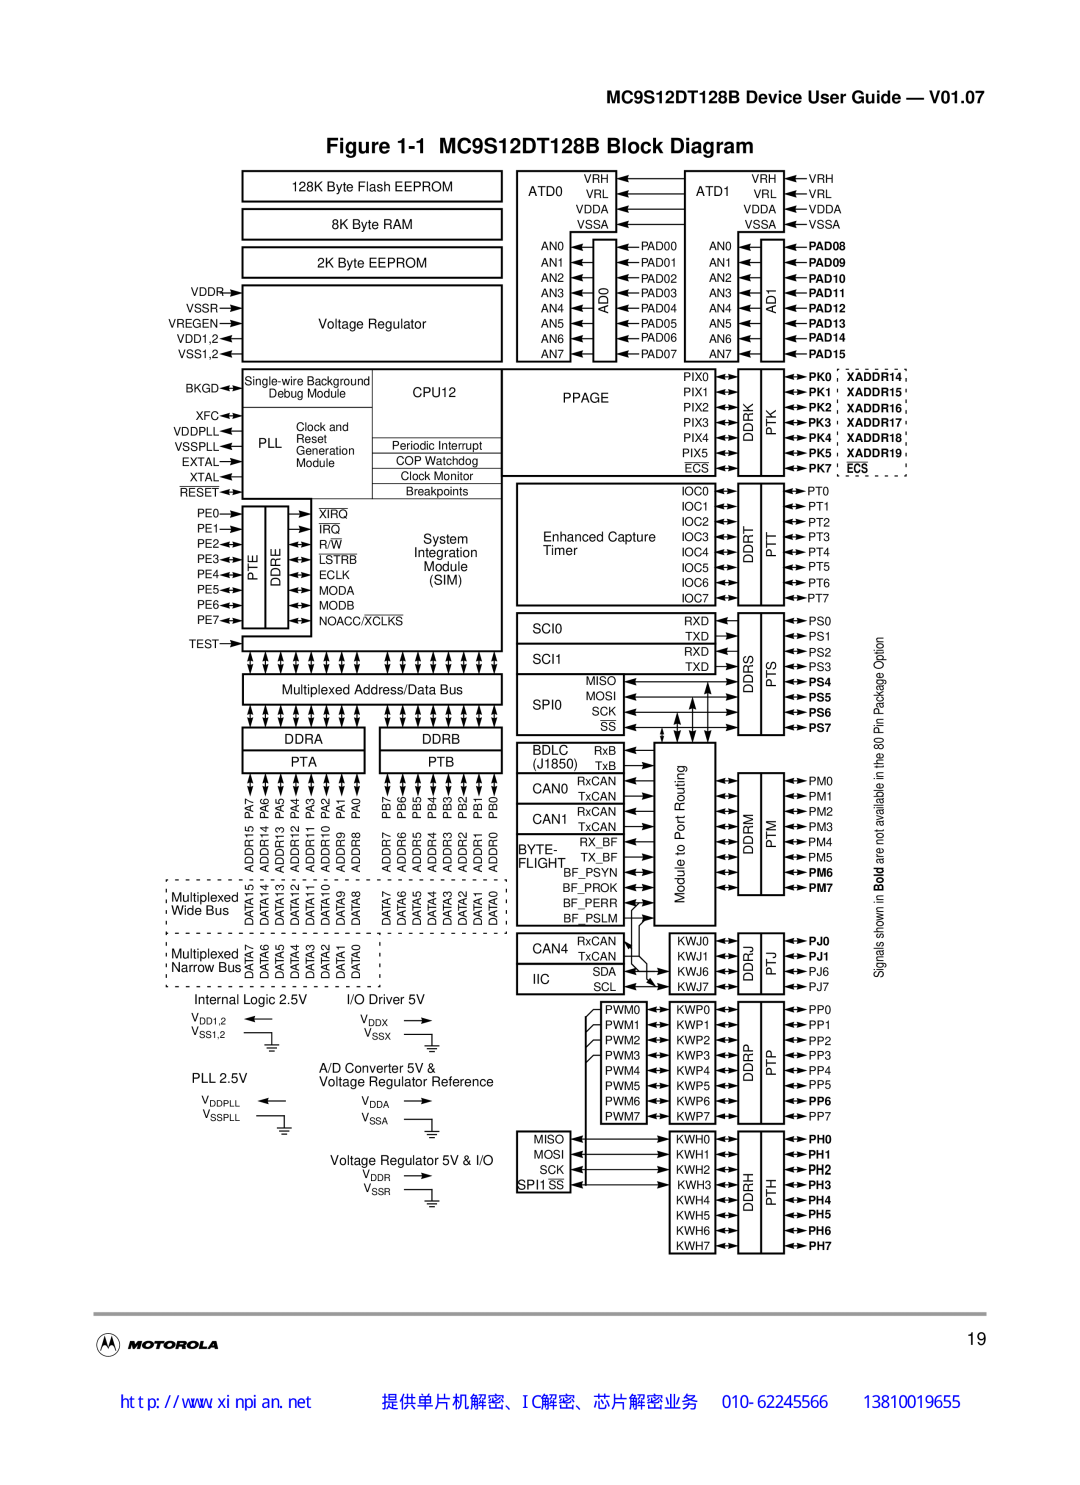 Motorola MC9S12DG128B, MC9S12DB128B, MC9S12DJ128B manual 1 MC9S12DT128B Block Diagram, 提供单片机解密、IC解密、芯片解密业务 010-62245566 